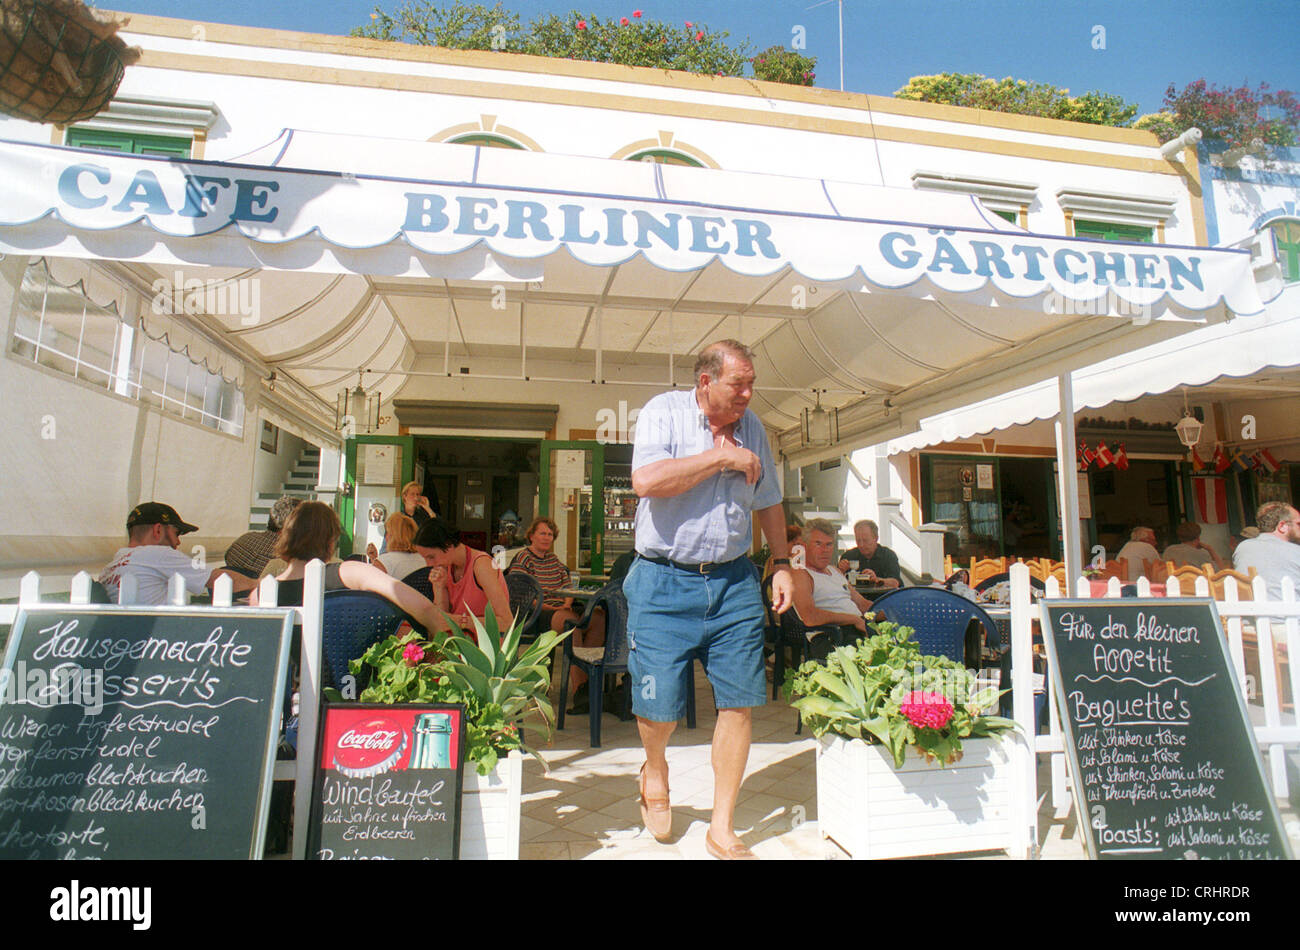 Puerto de Mogan, Gran Canaria, Spain, Cafe Berlin Gaertchen-in harbor Stock Photo